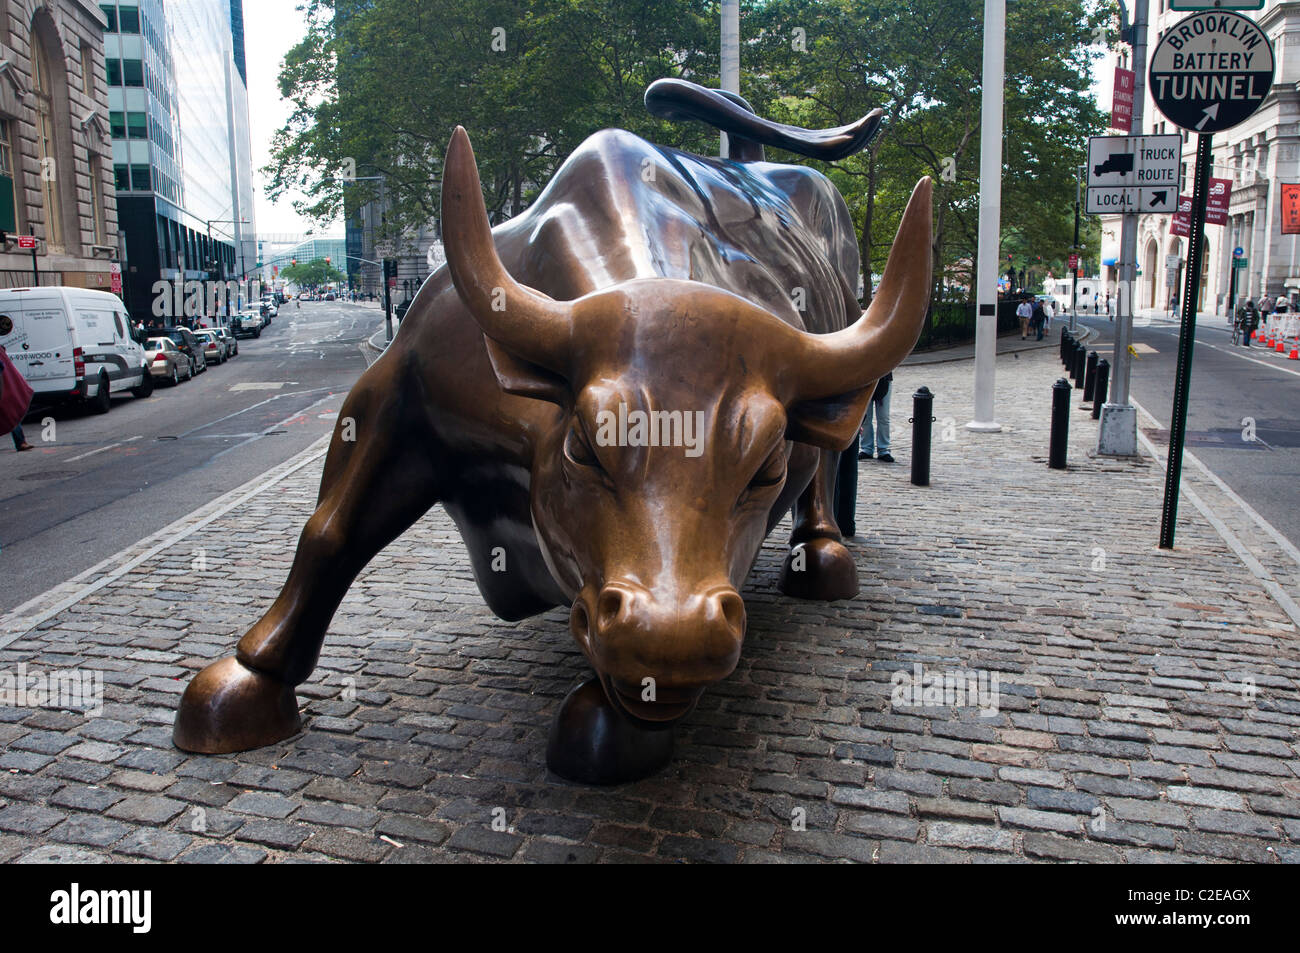 Laden Sie Bull. Wall Street Bull oder Bowling Green Bull Bronzestatue, Financial District, NYC, Wohlstand, Wall Street, agressiv Stockfoto